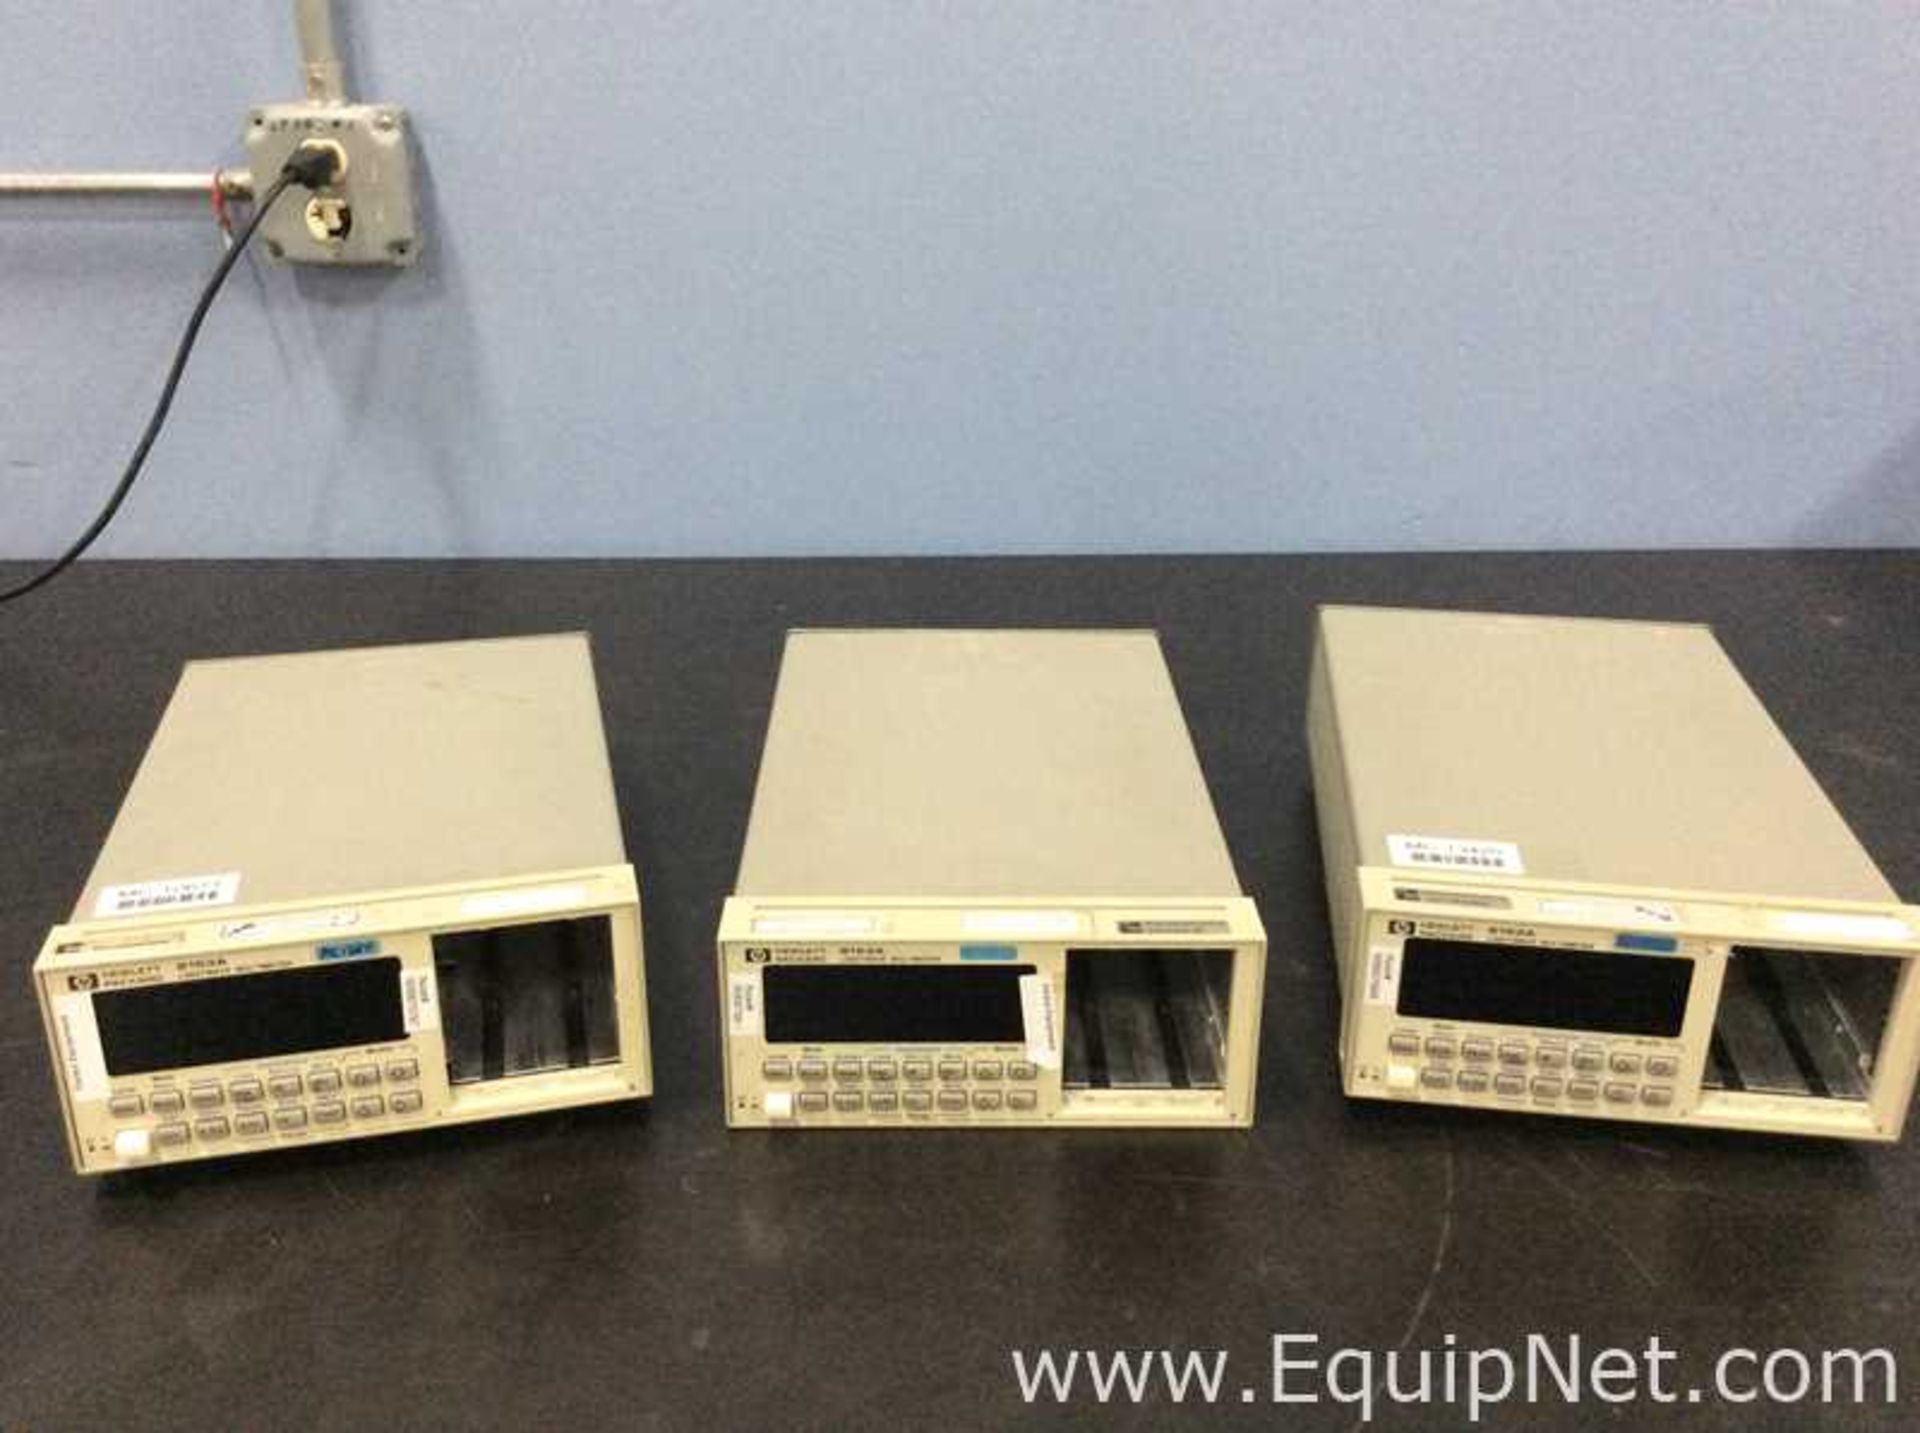 Lot of 3 Hewlett Packard 8153A Lightwave Multimeters - Image 7 of 15